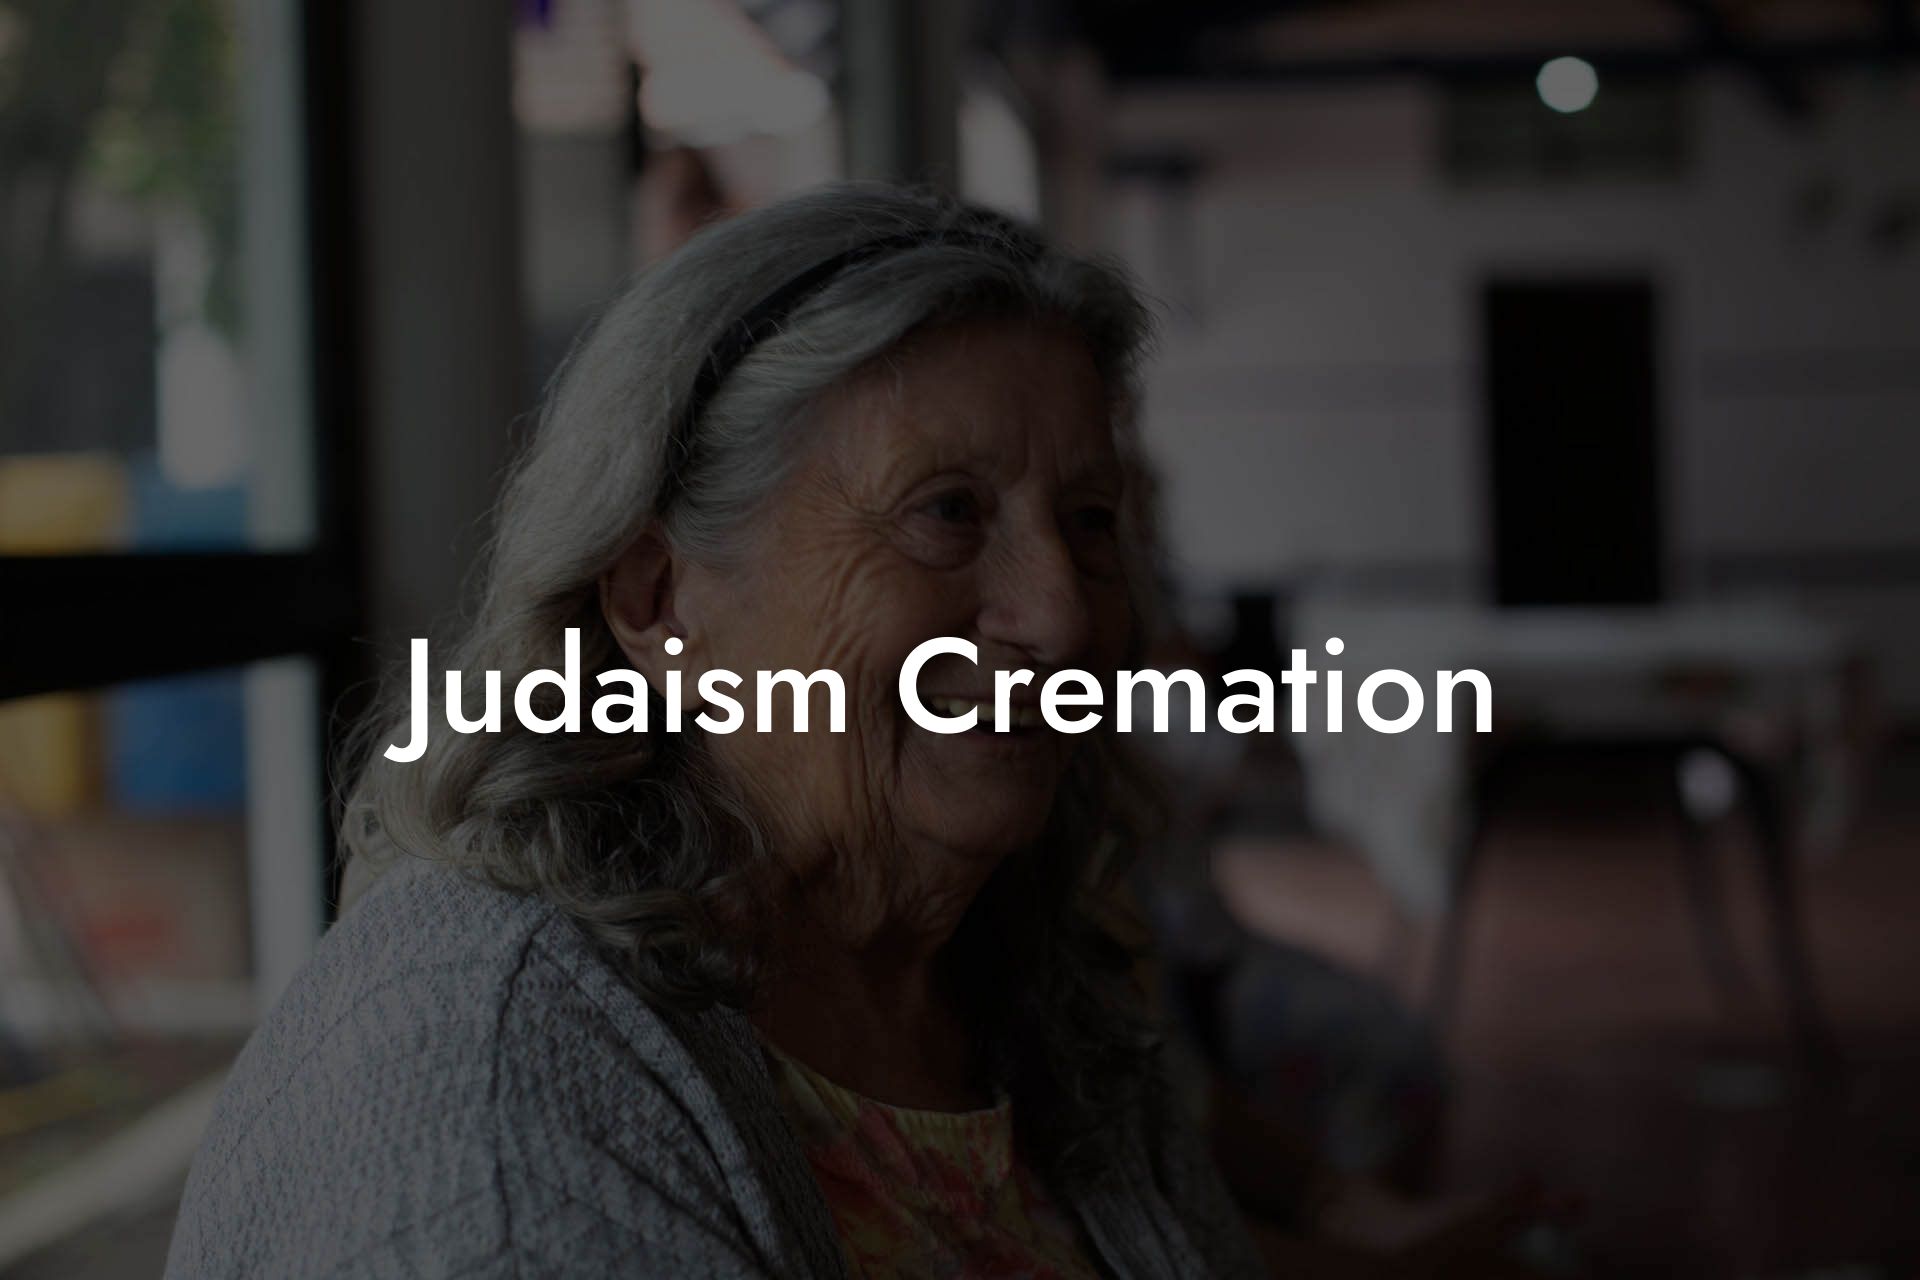 Judaism Cremation